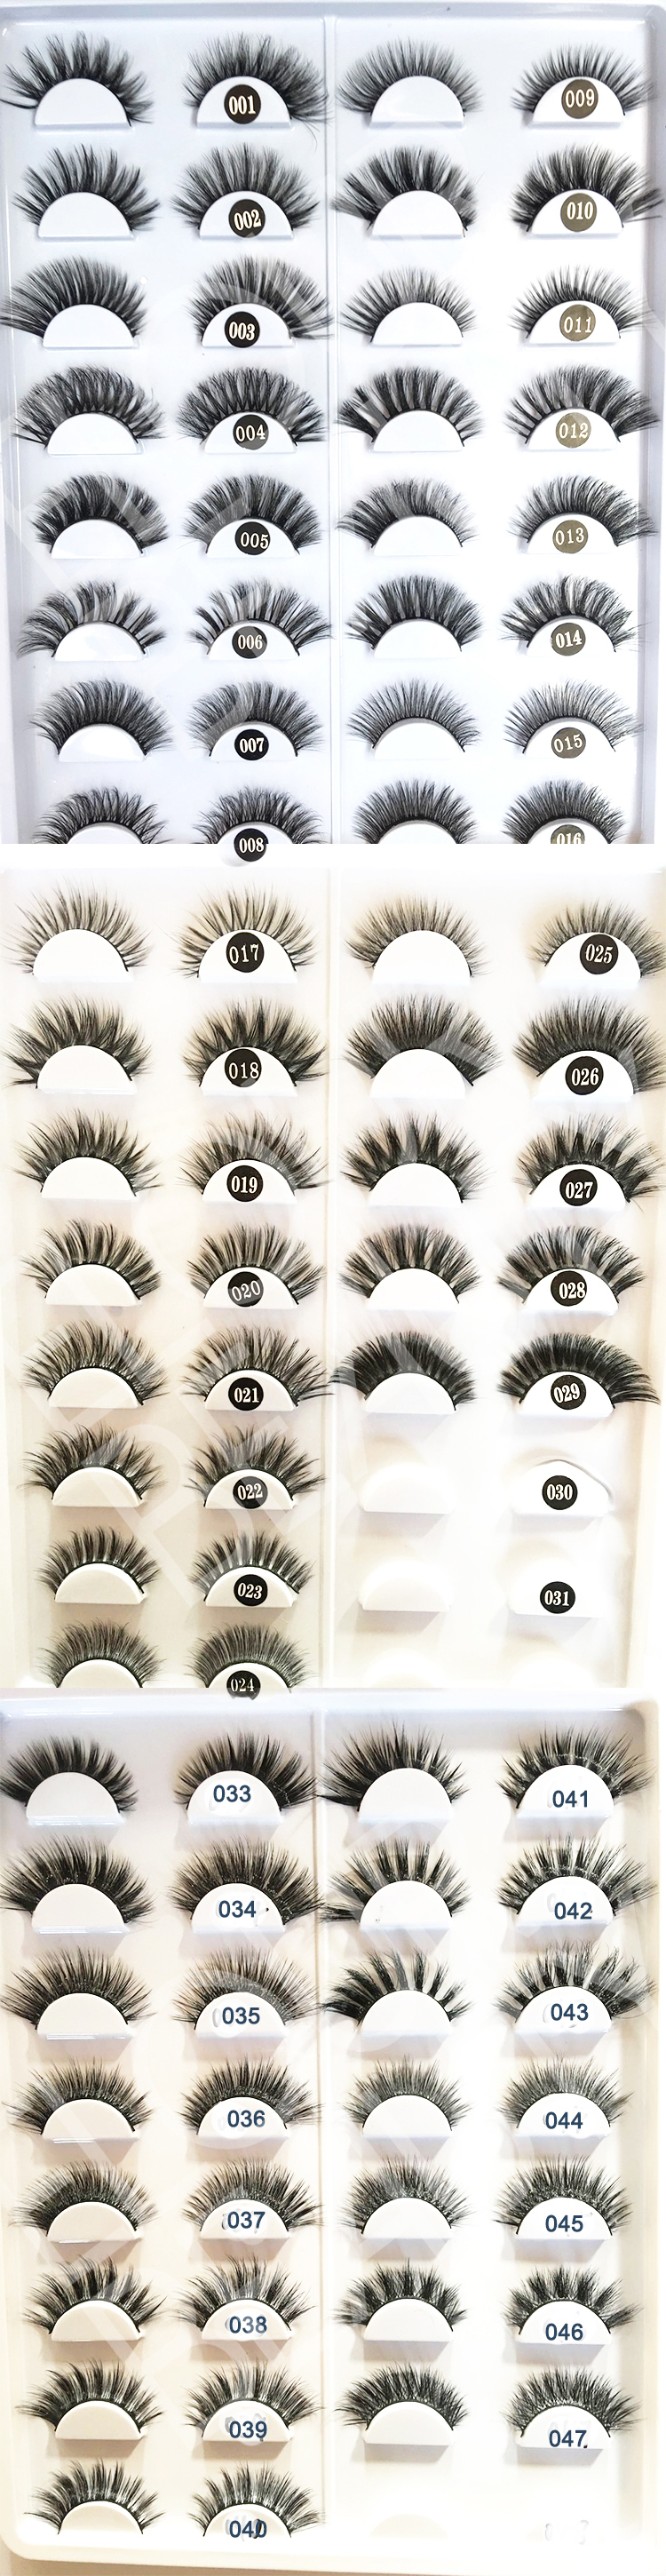 hundreds styles of 3d faux mink eyelashes wholesale.jpg